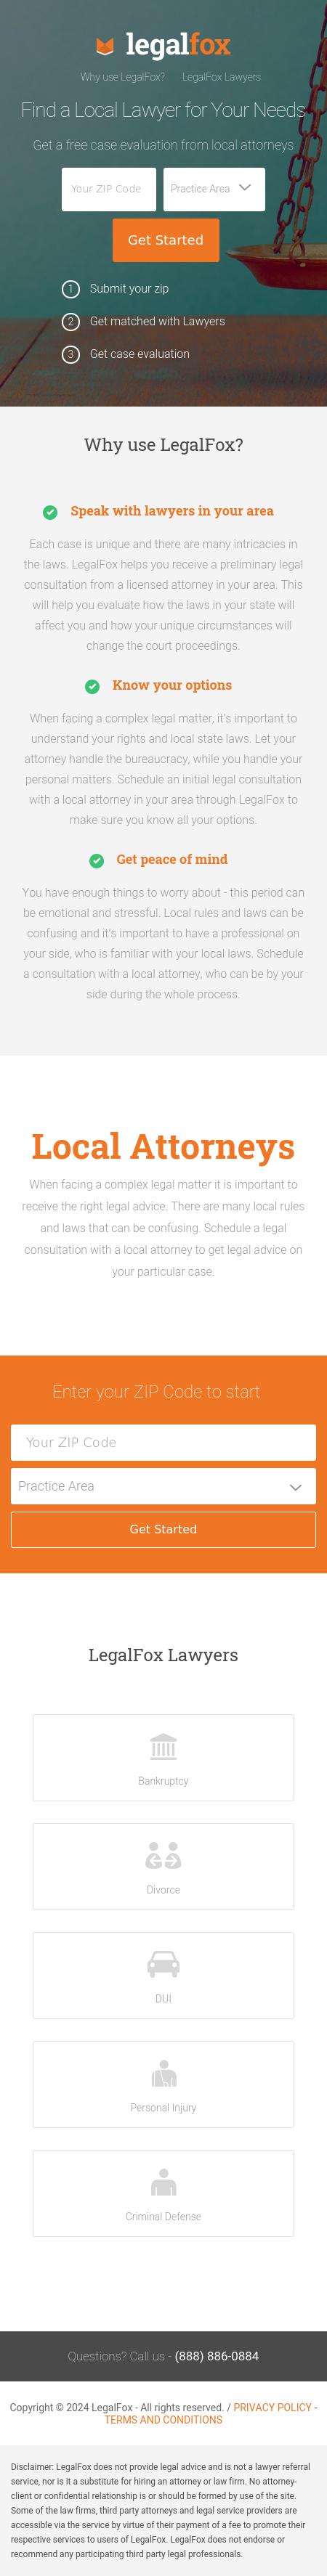 Find a Local Attorney - Midland TX Lawyers